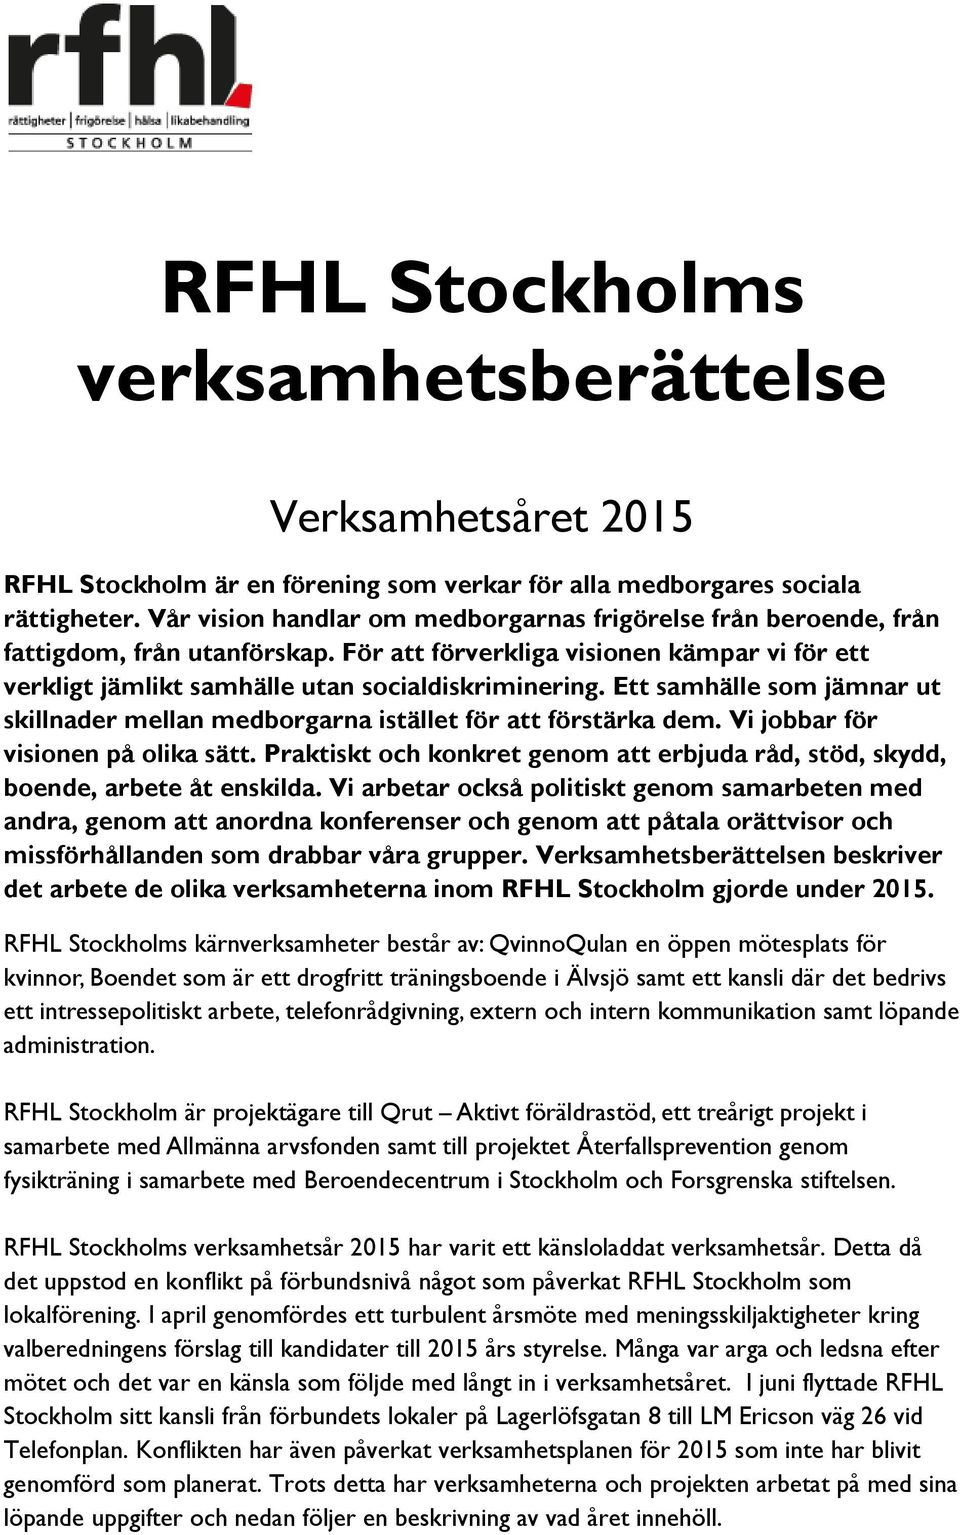 RFHL Stockholms verksamhetsberättelse - PDF Free Download